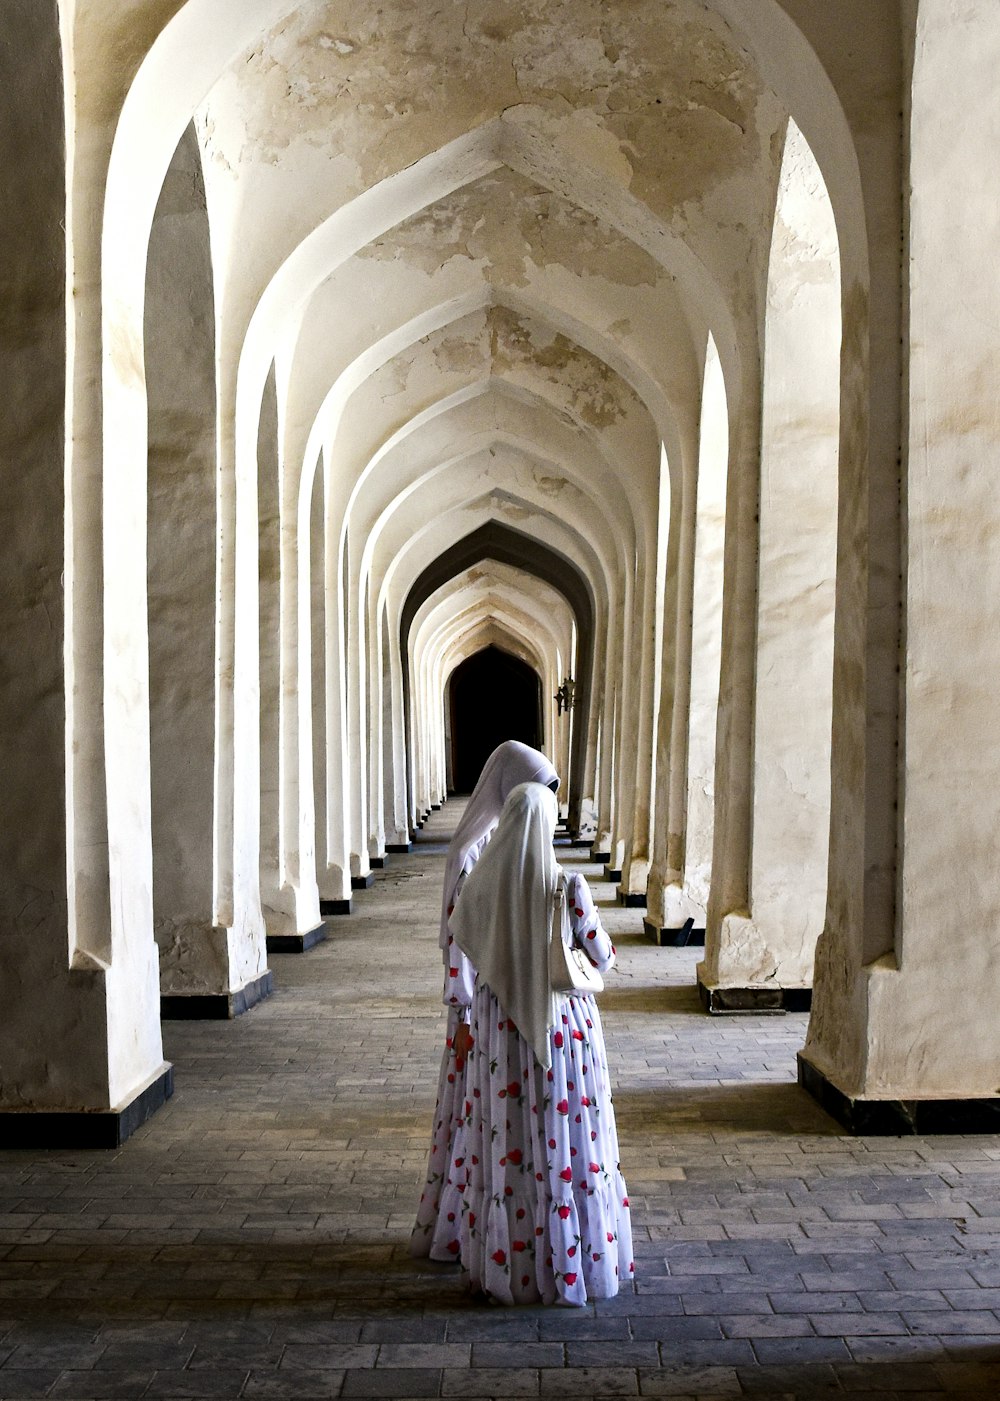 a woman in a white dress is walking down a long hallway